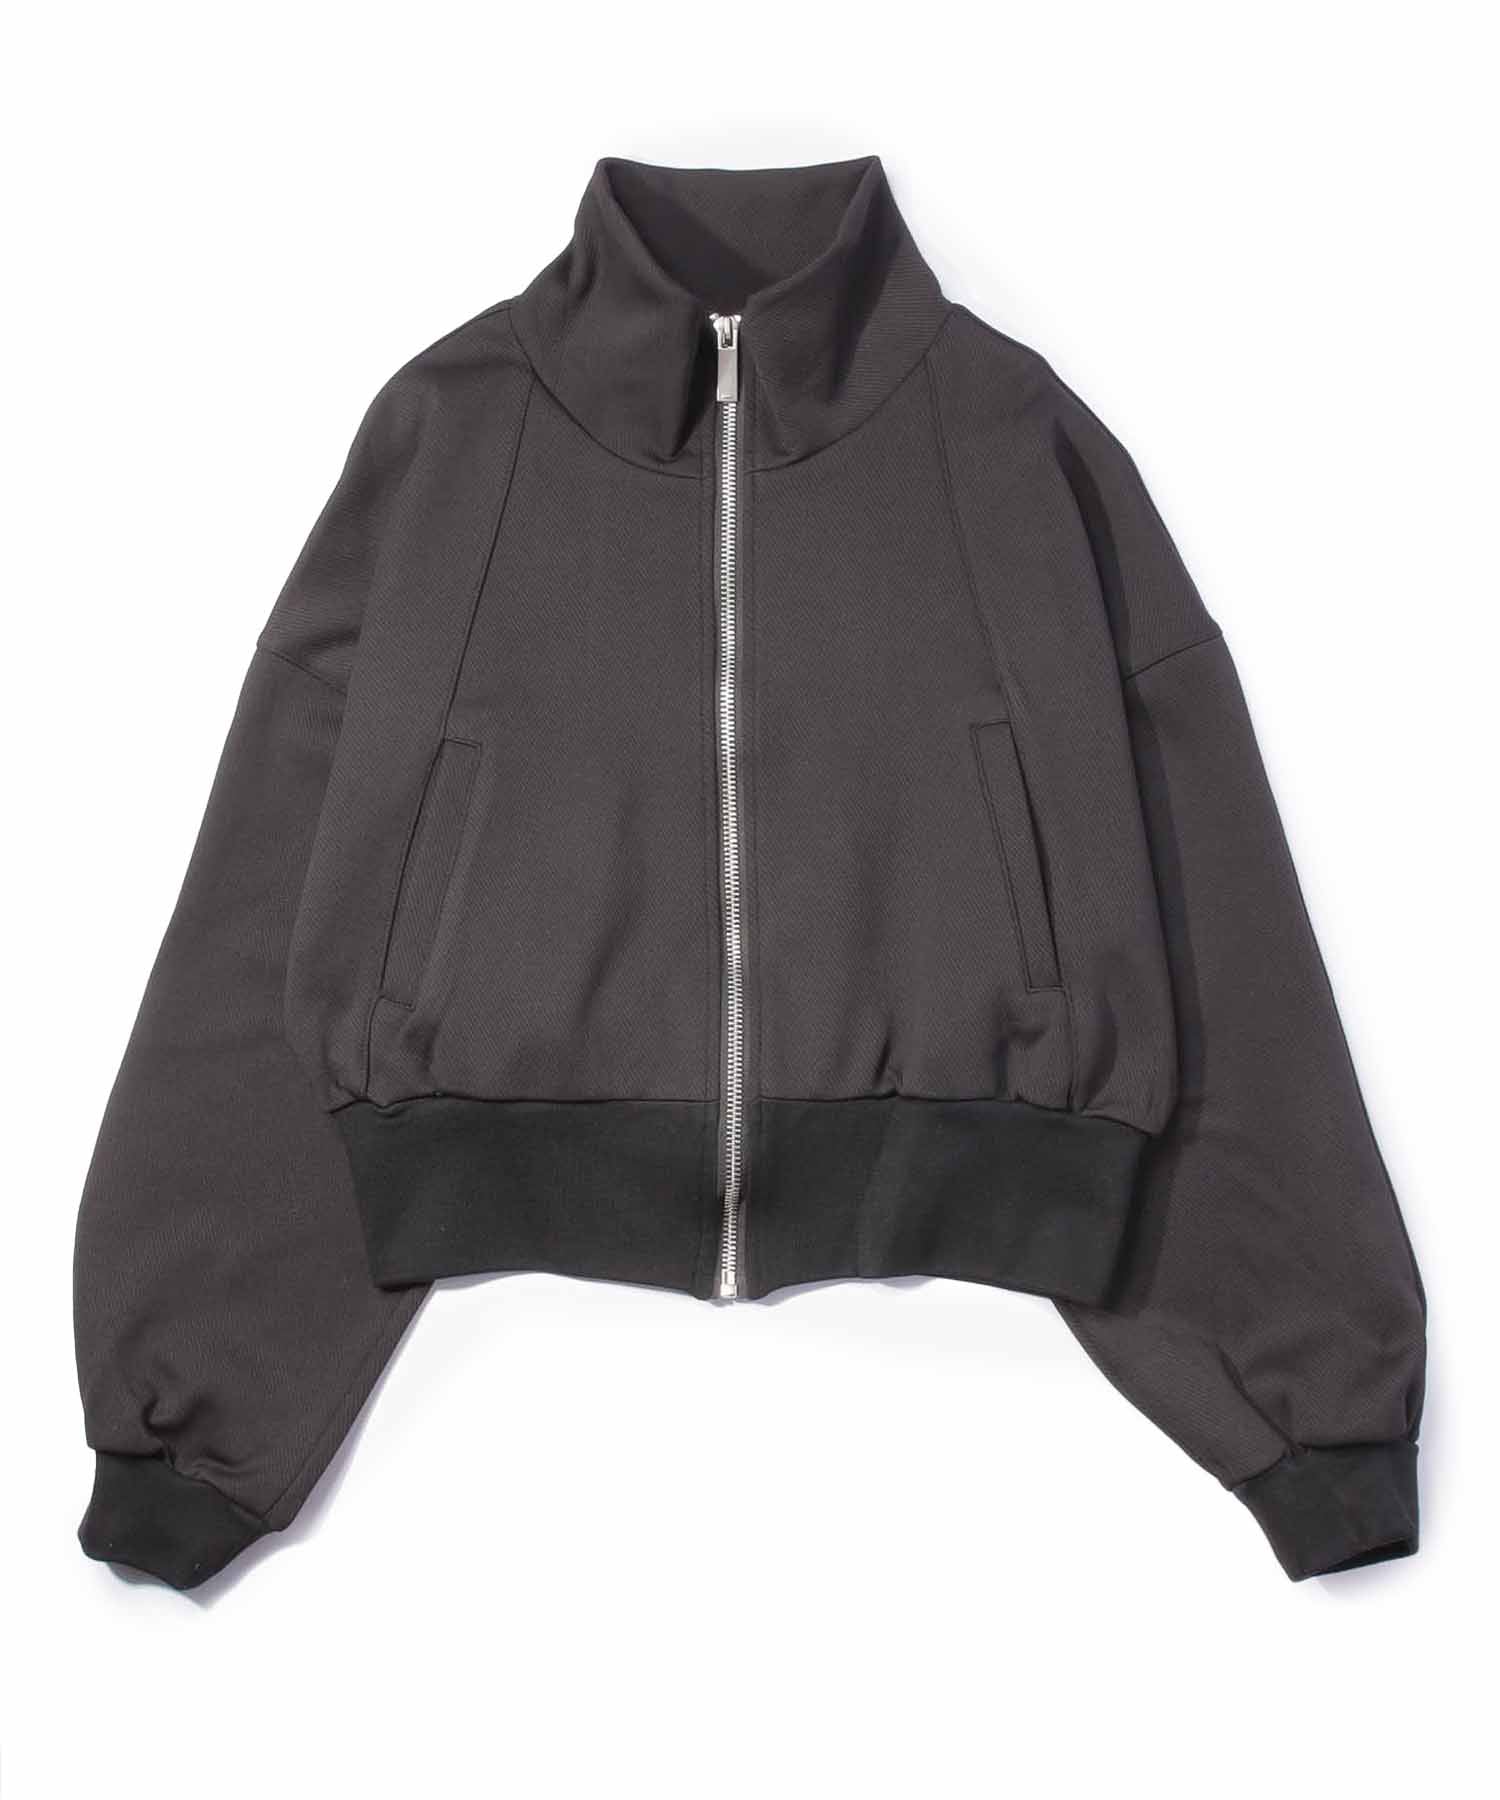 nnnoy ナイロントラックジャケット  XL /ブラック/ 黒刺繍  21AWXLサイズ